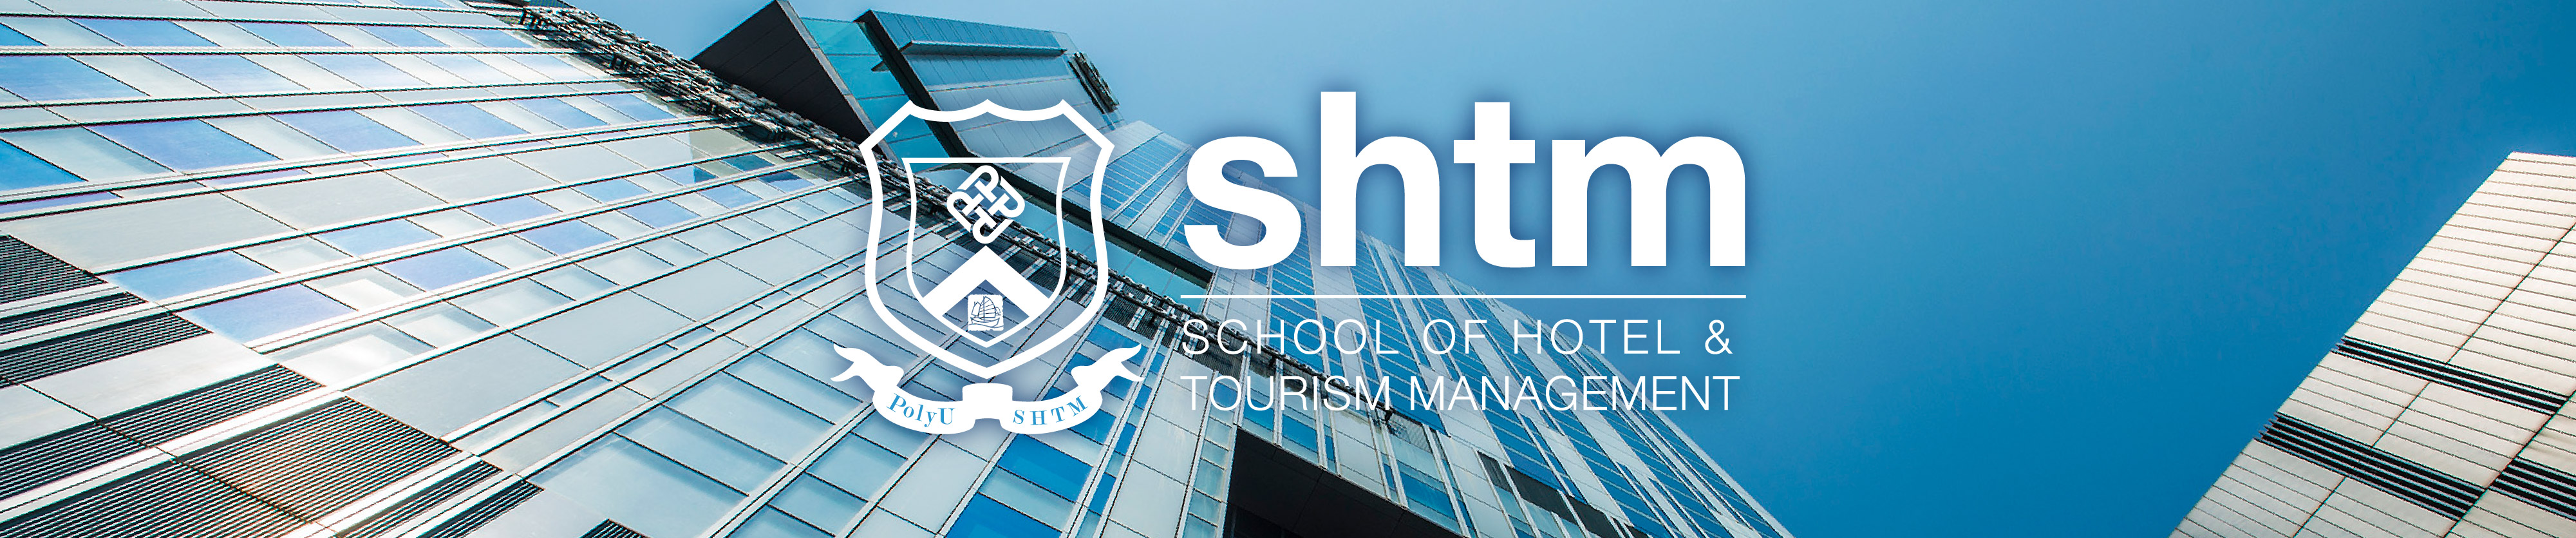 school of hotel & tourism management